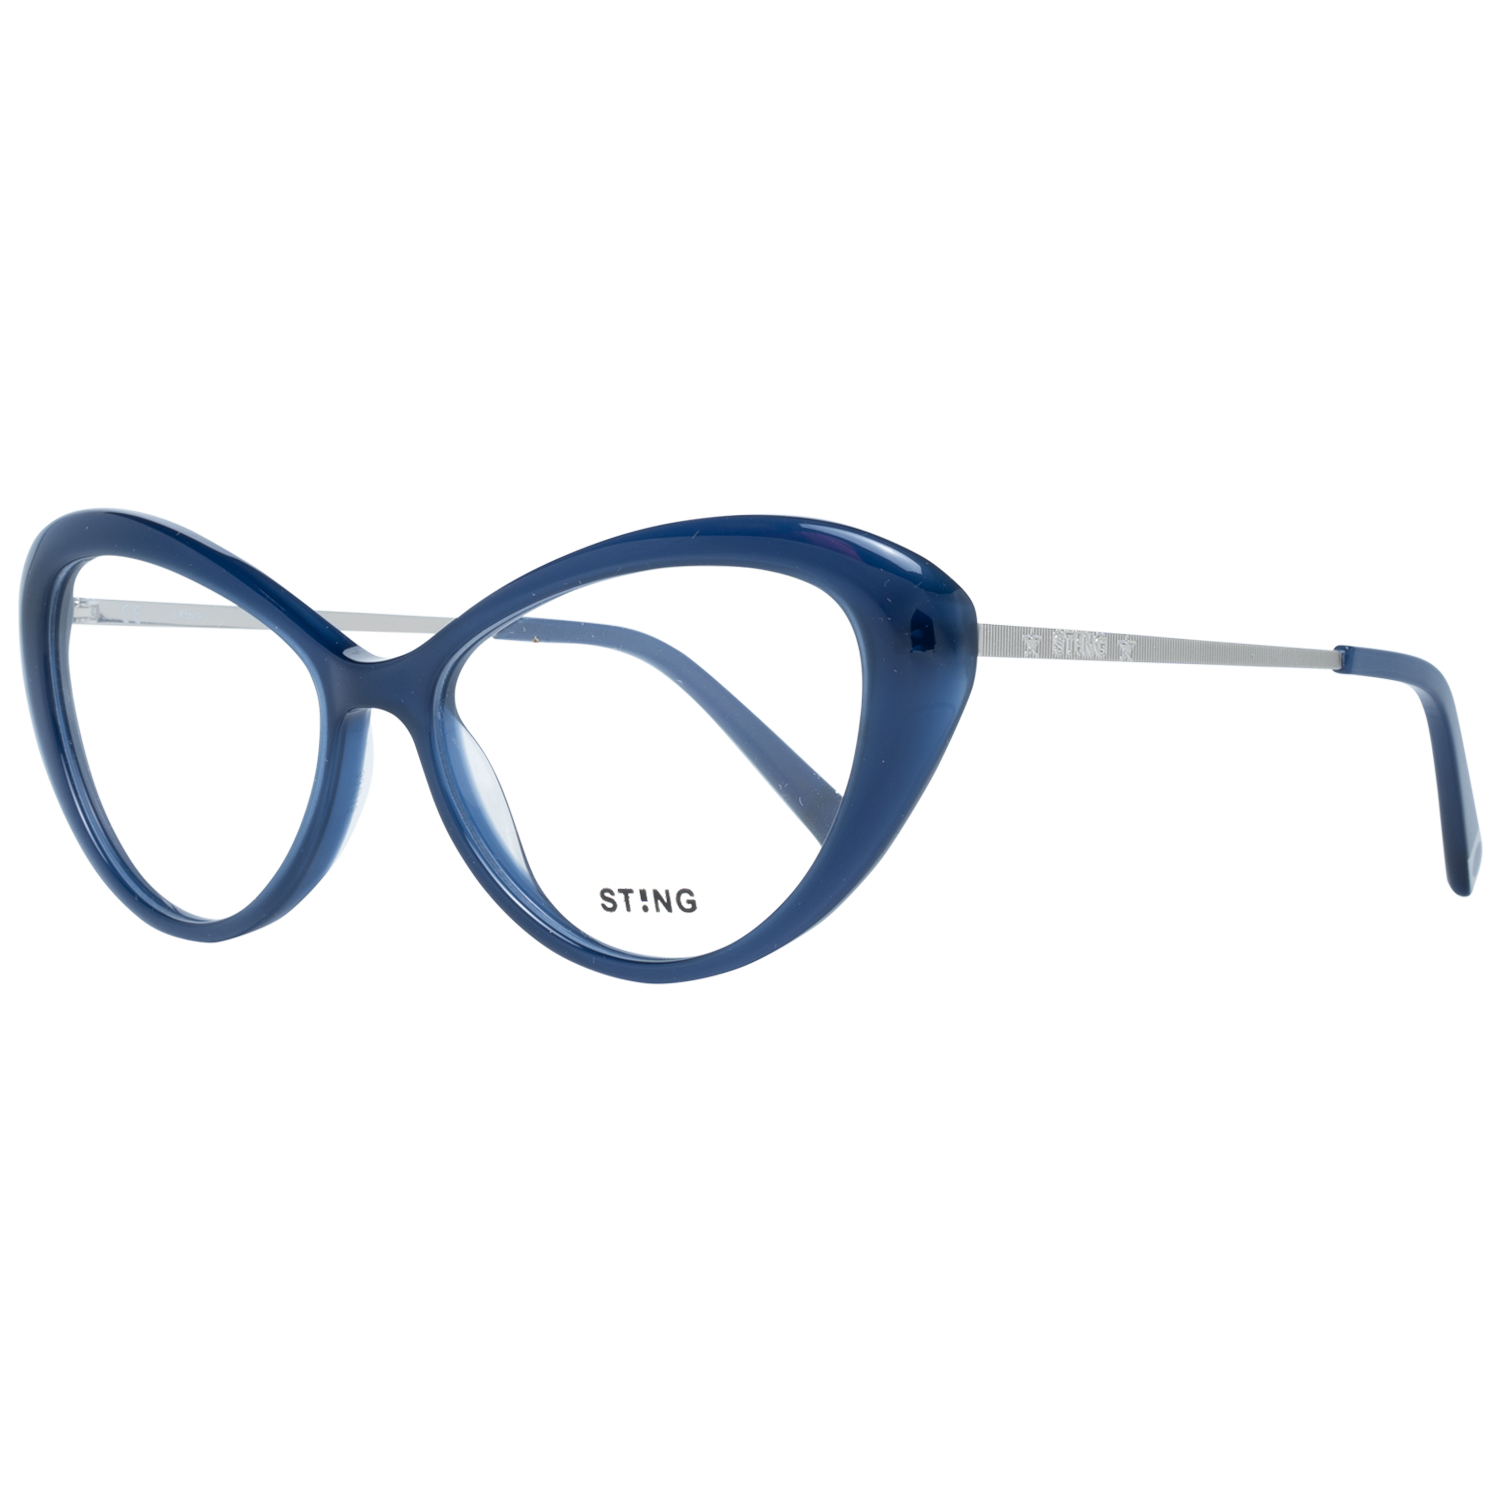 Sting Frames Sting Optical Frame VST297 03GR 53 Eyeglasses Eyewear UK USA Australia 